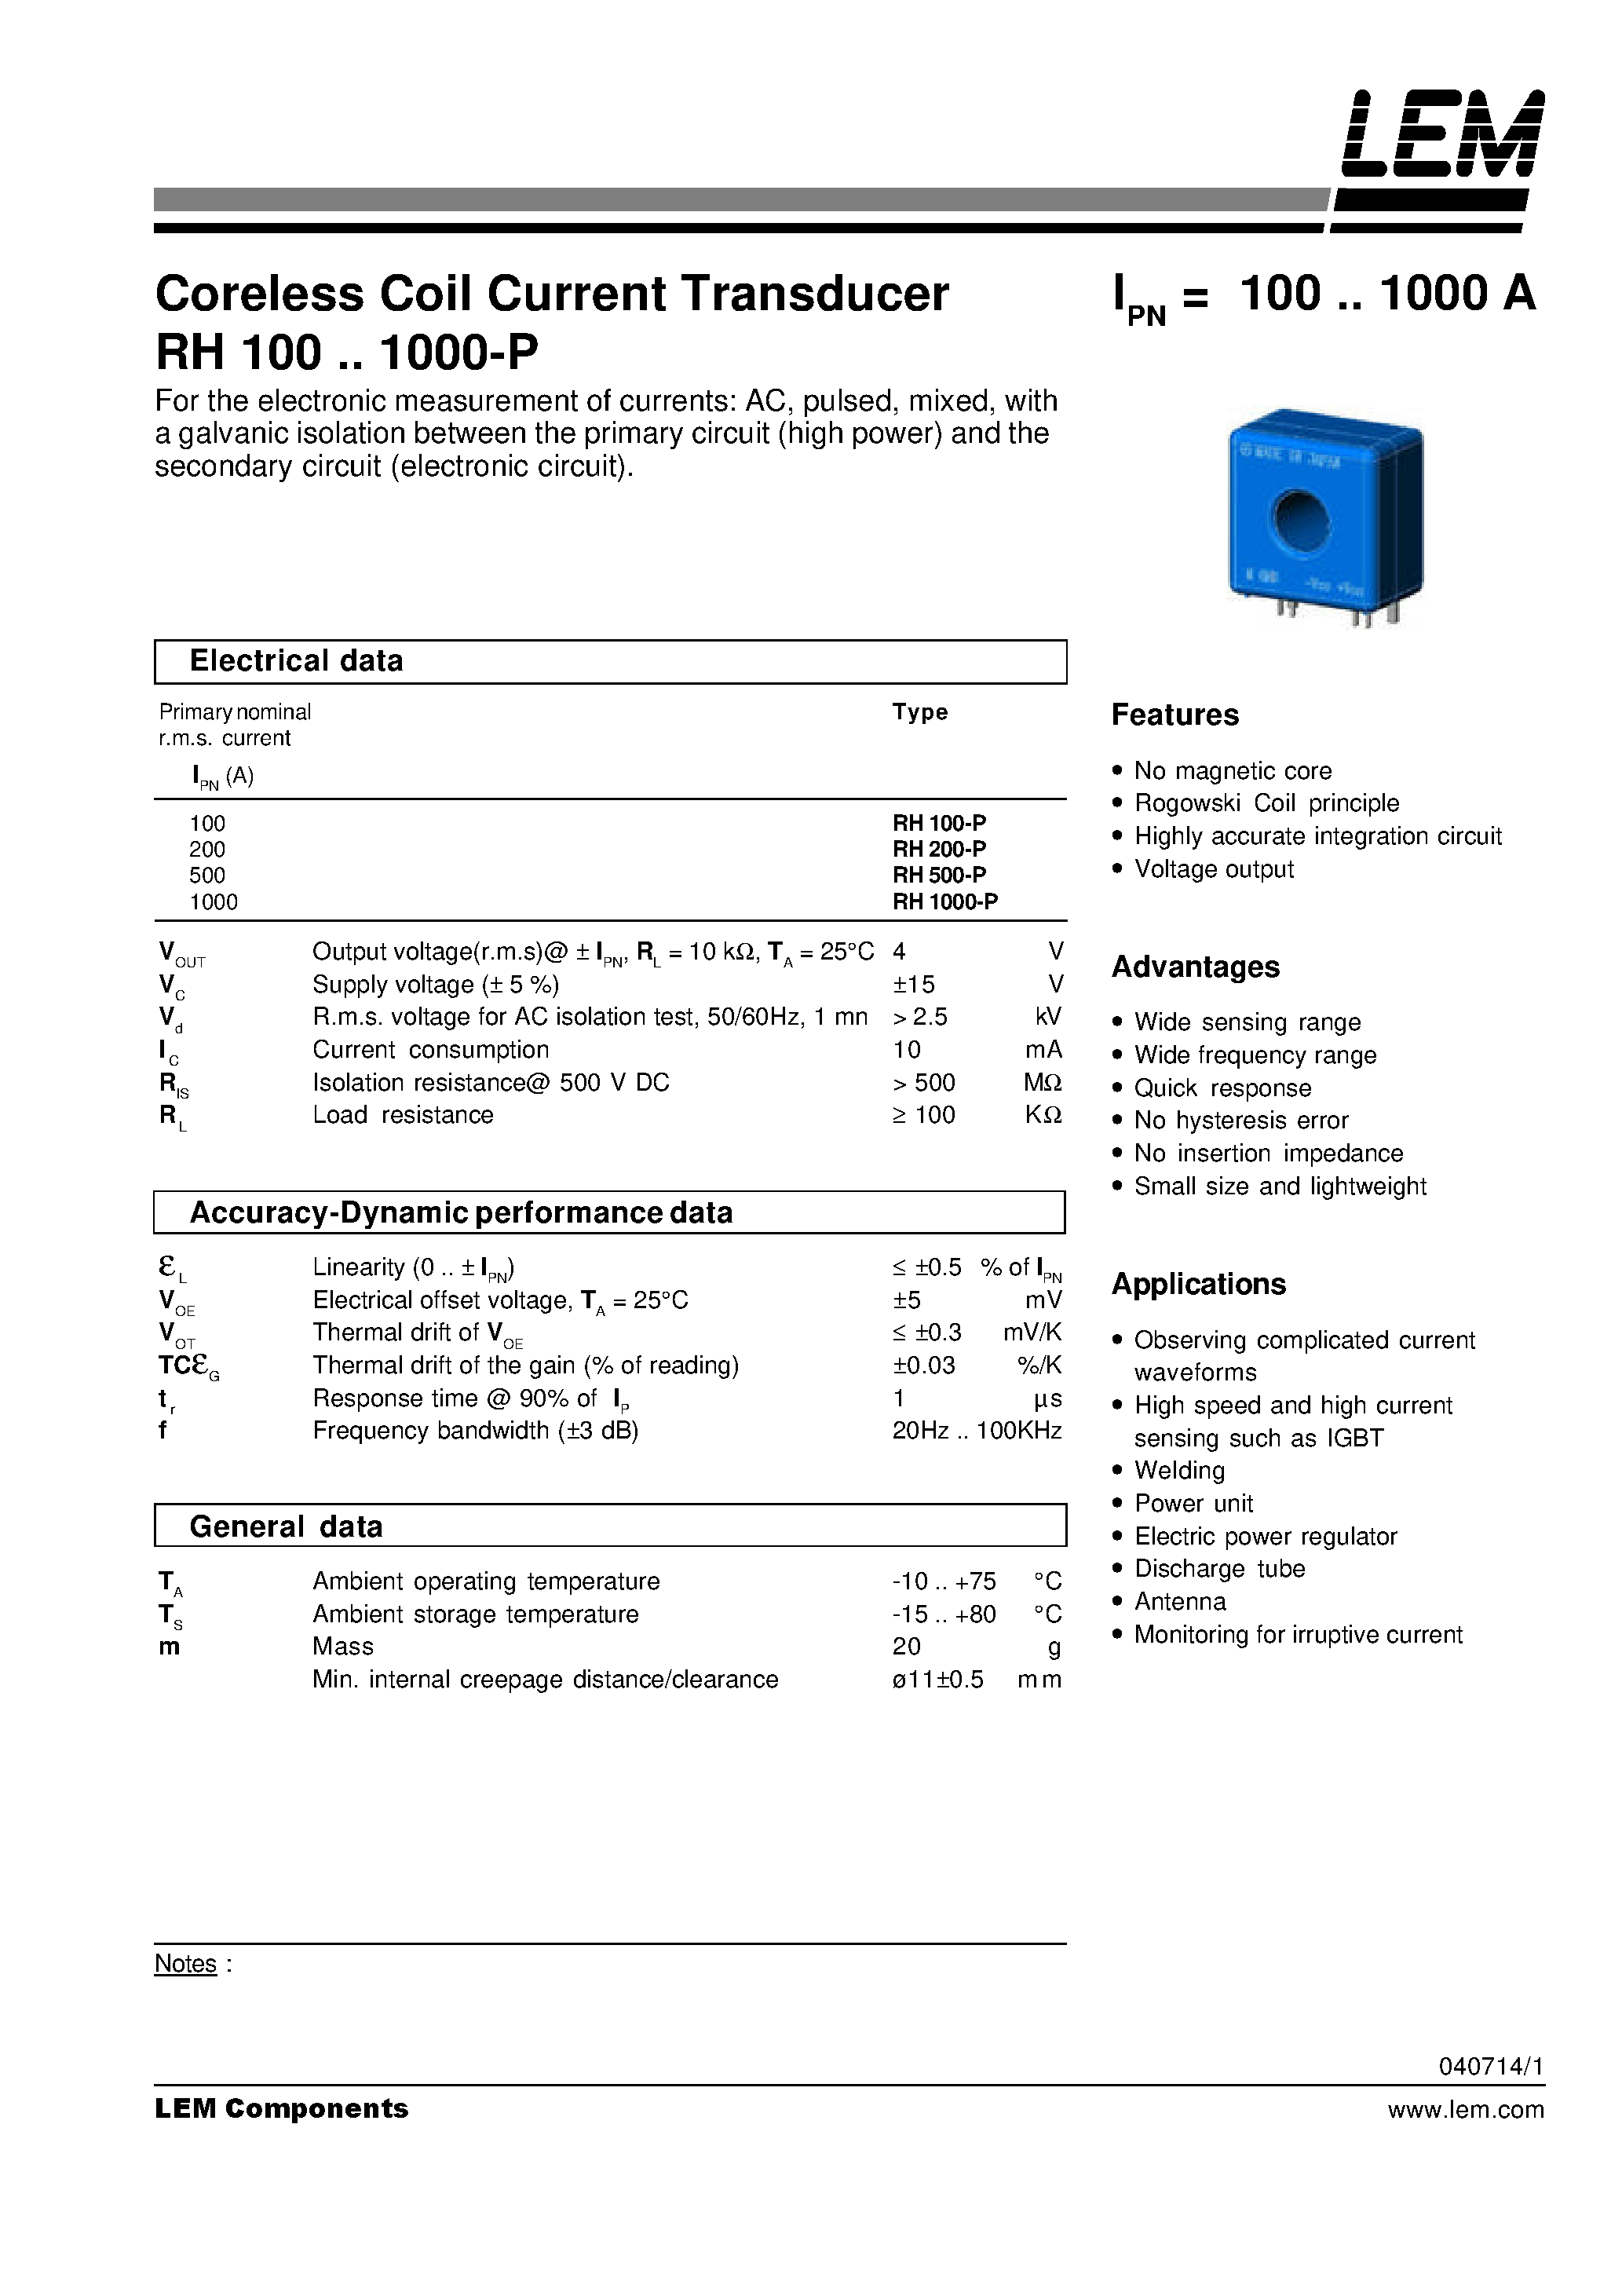 Datasheet RH200-P - Coreless Coil Current Transducer RH 100~1000-P page 1